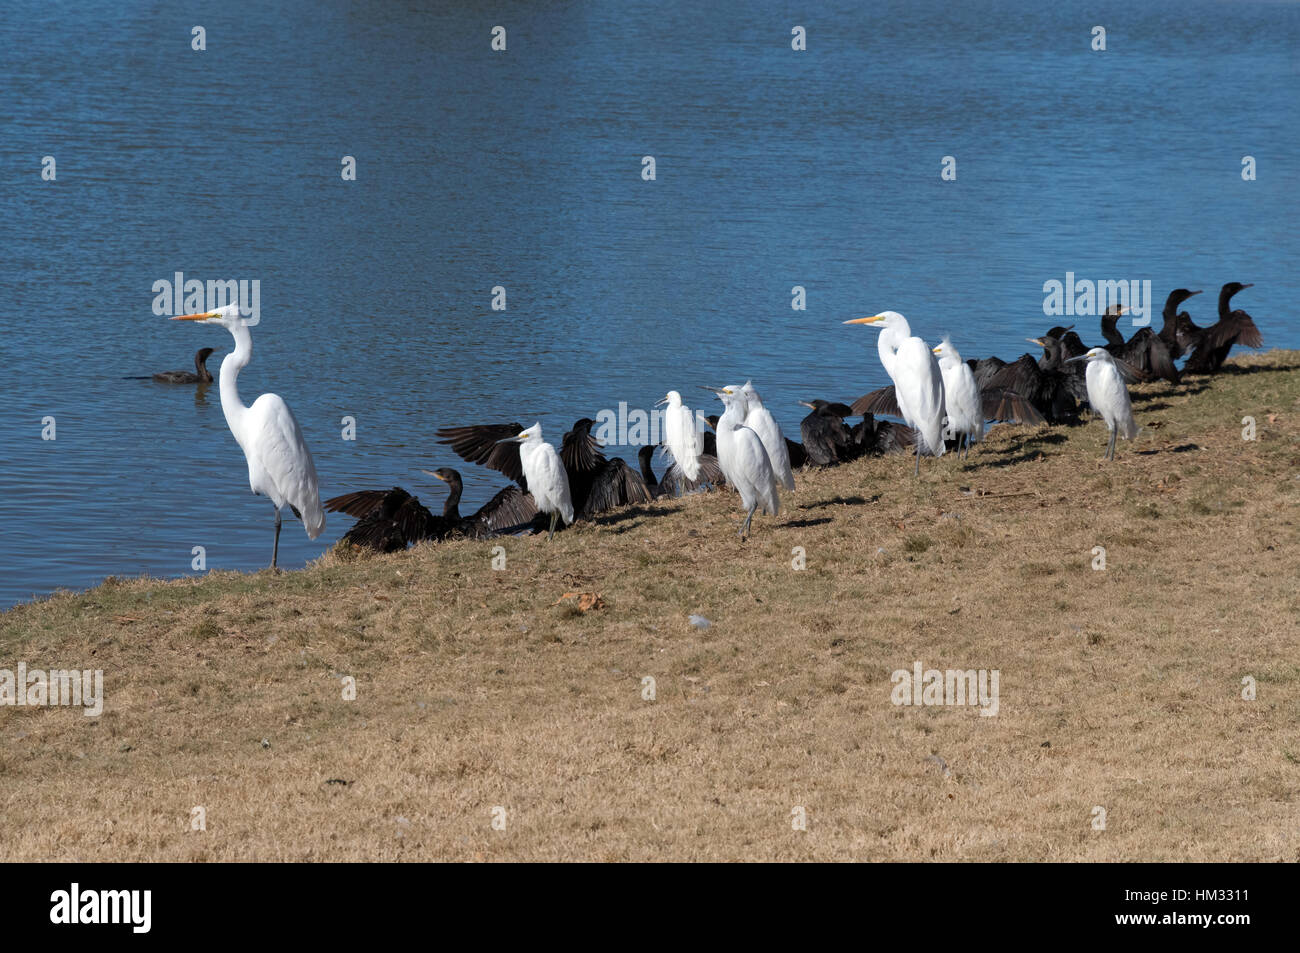 egrets with ducks Stock Photo